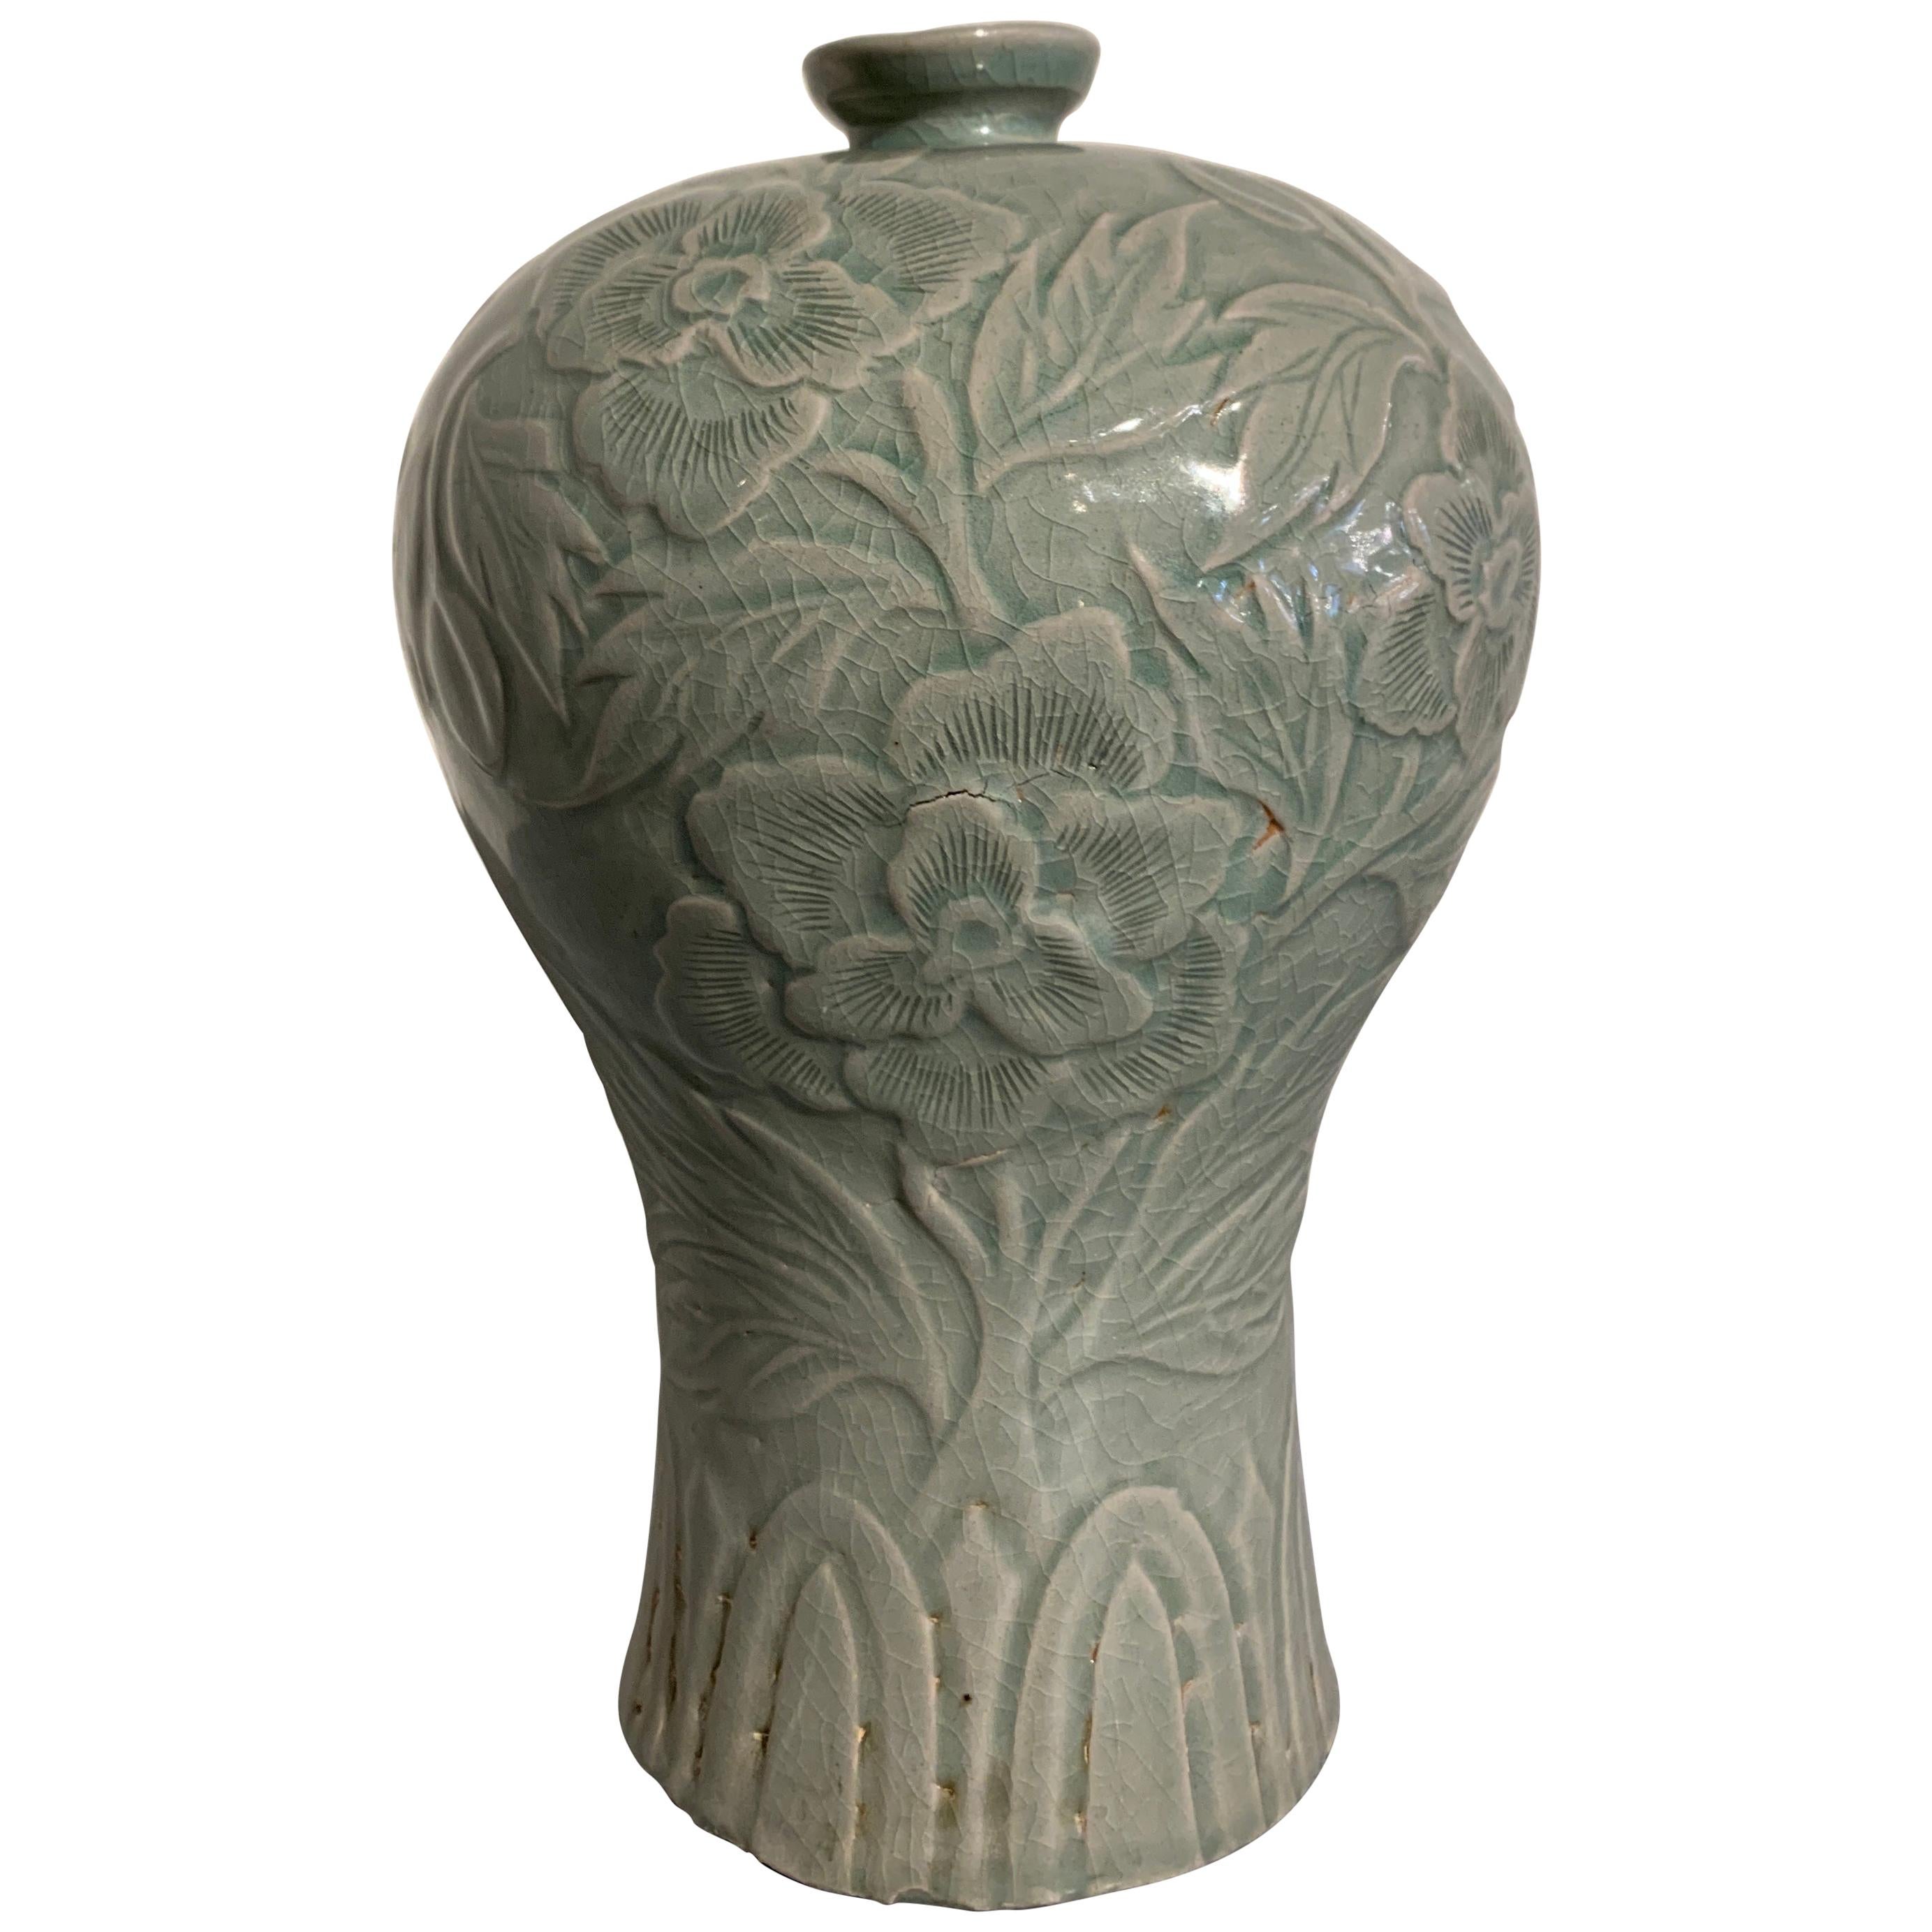 Korean Carved Celadon Vase, Maebyeong, Goryeo Style, Early 20th Century